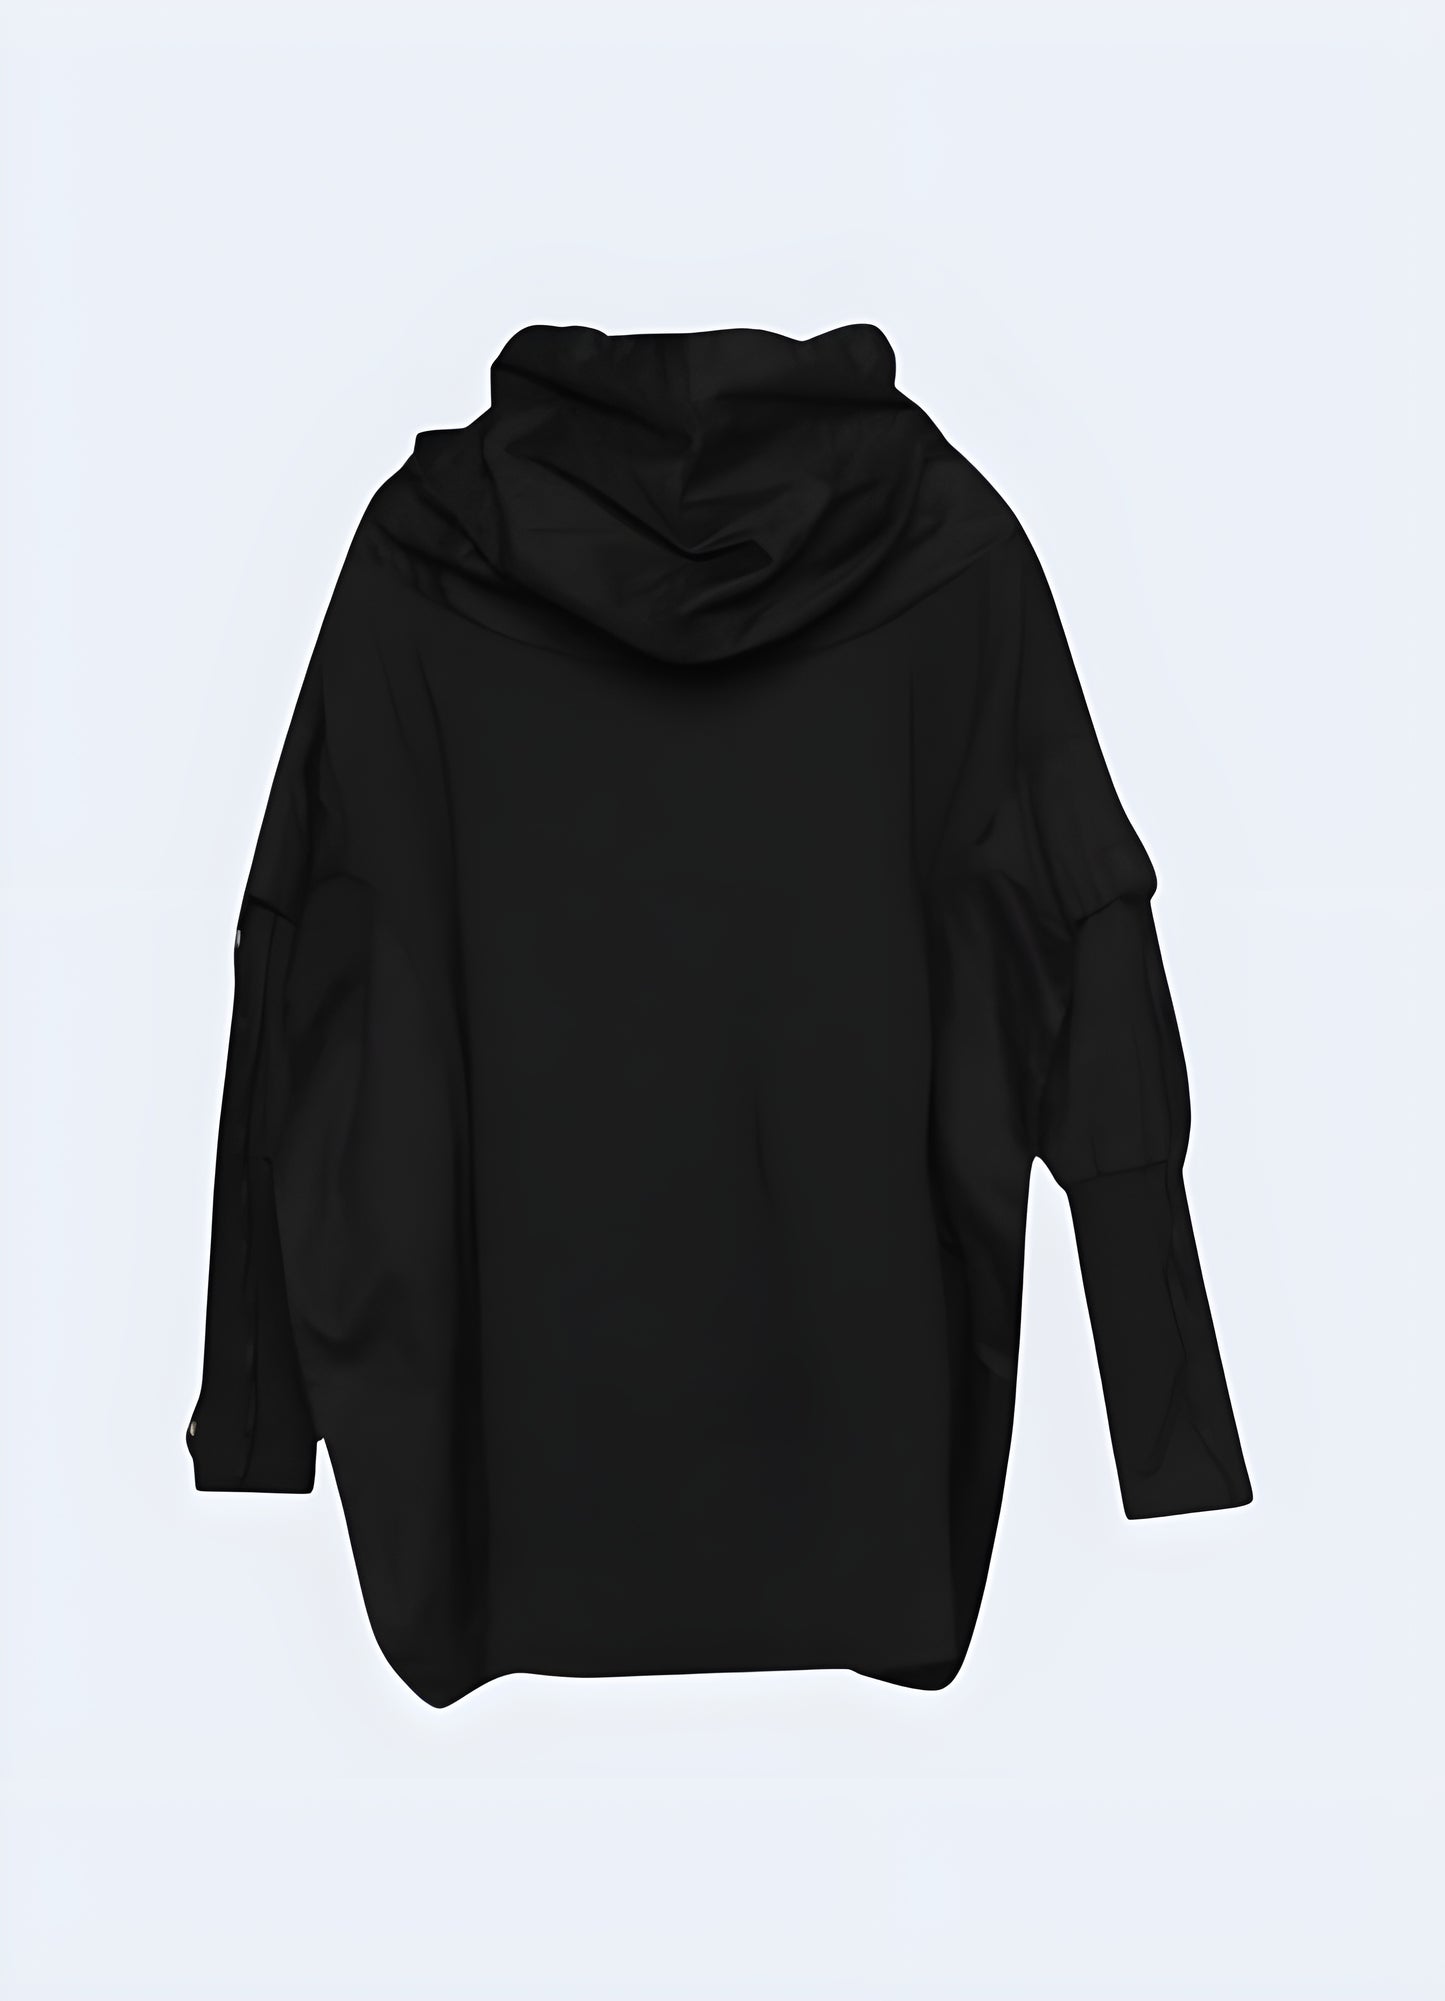 Urban Style, high collar dark hoodie.